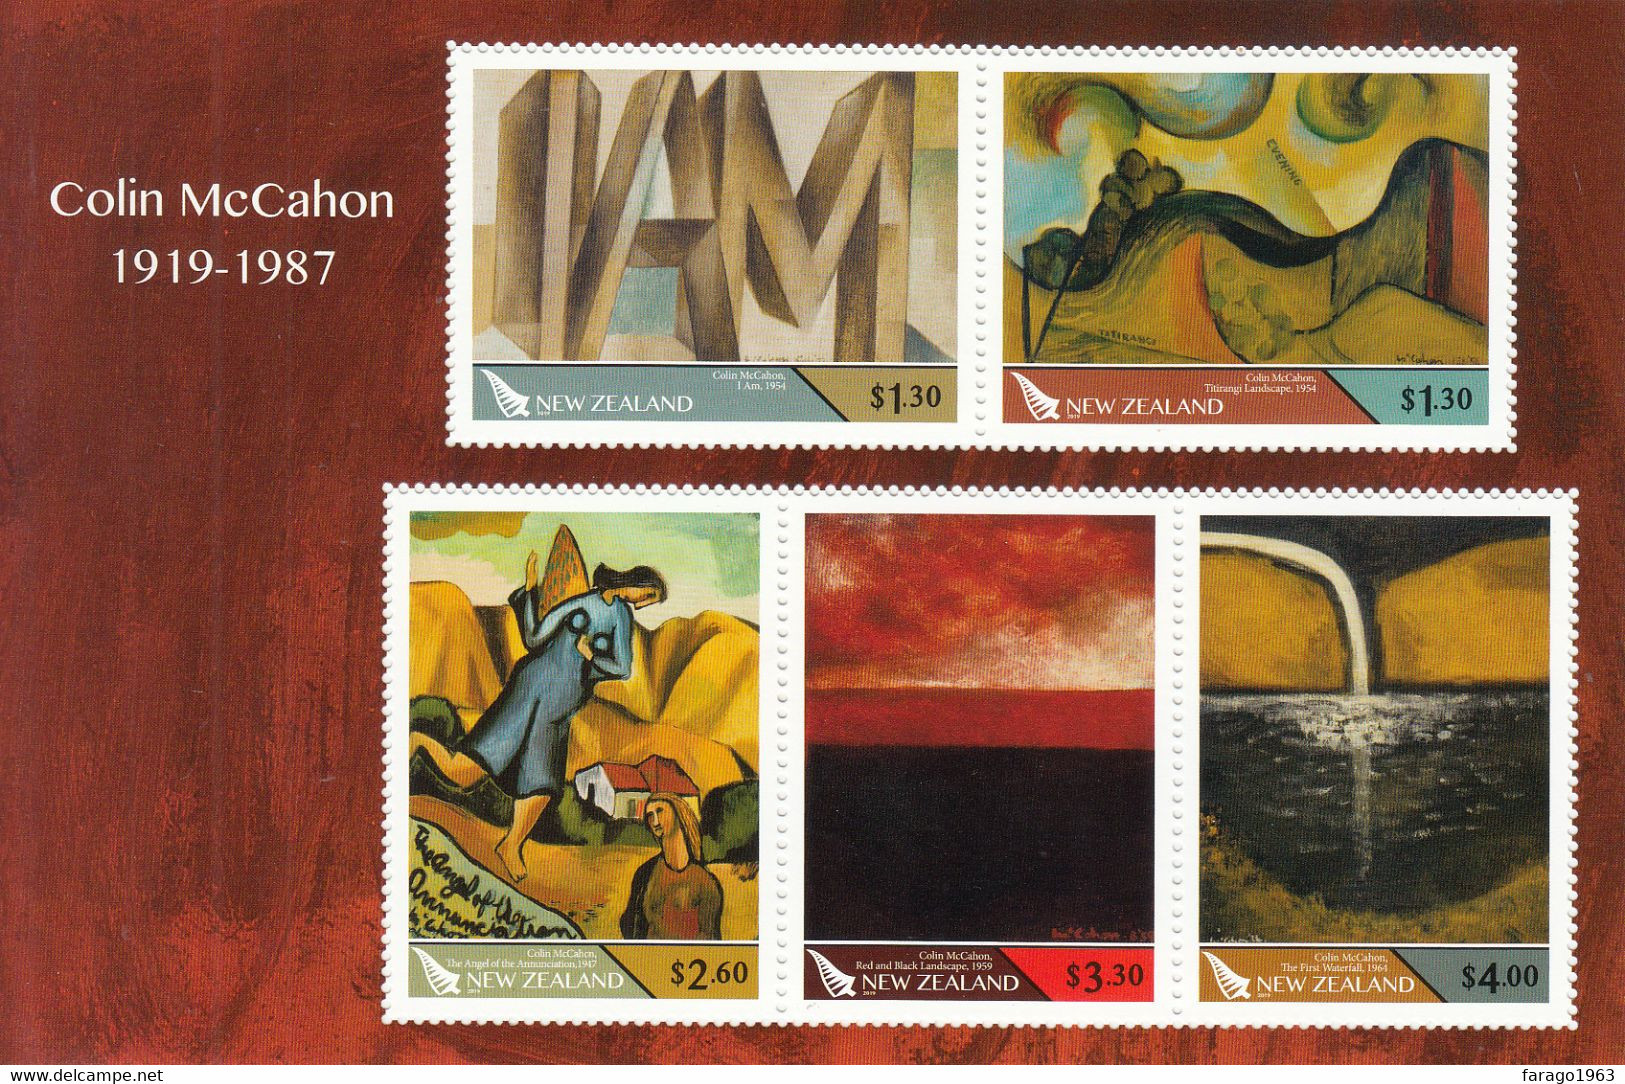 2019 New Zealand Colin McCahon Art Paintings Souvenir Sheet MNH @ BELOW FACE VALUE - Unused Stamps